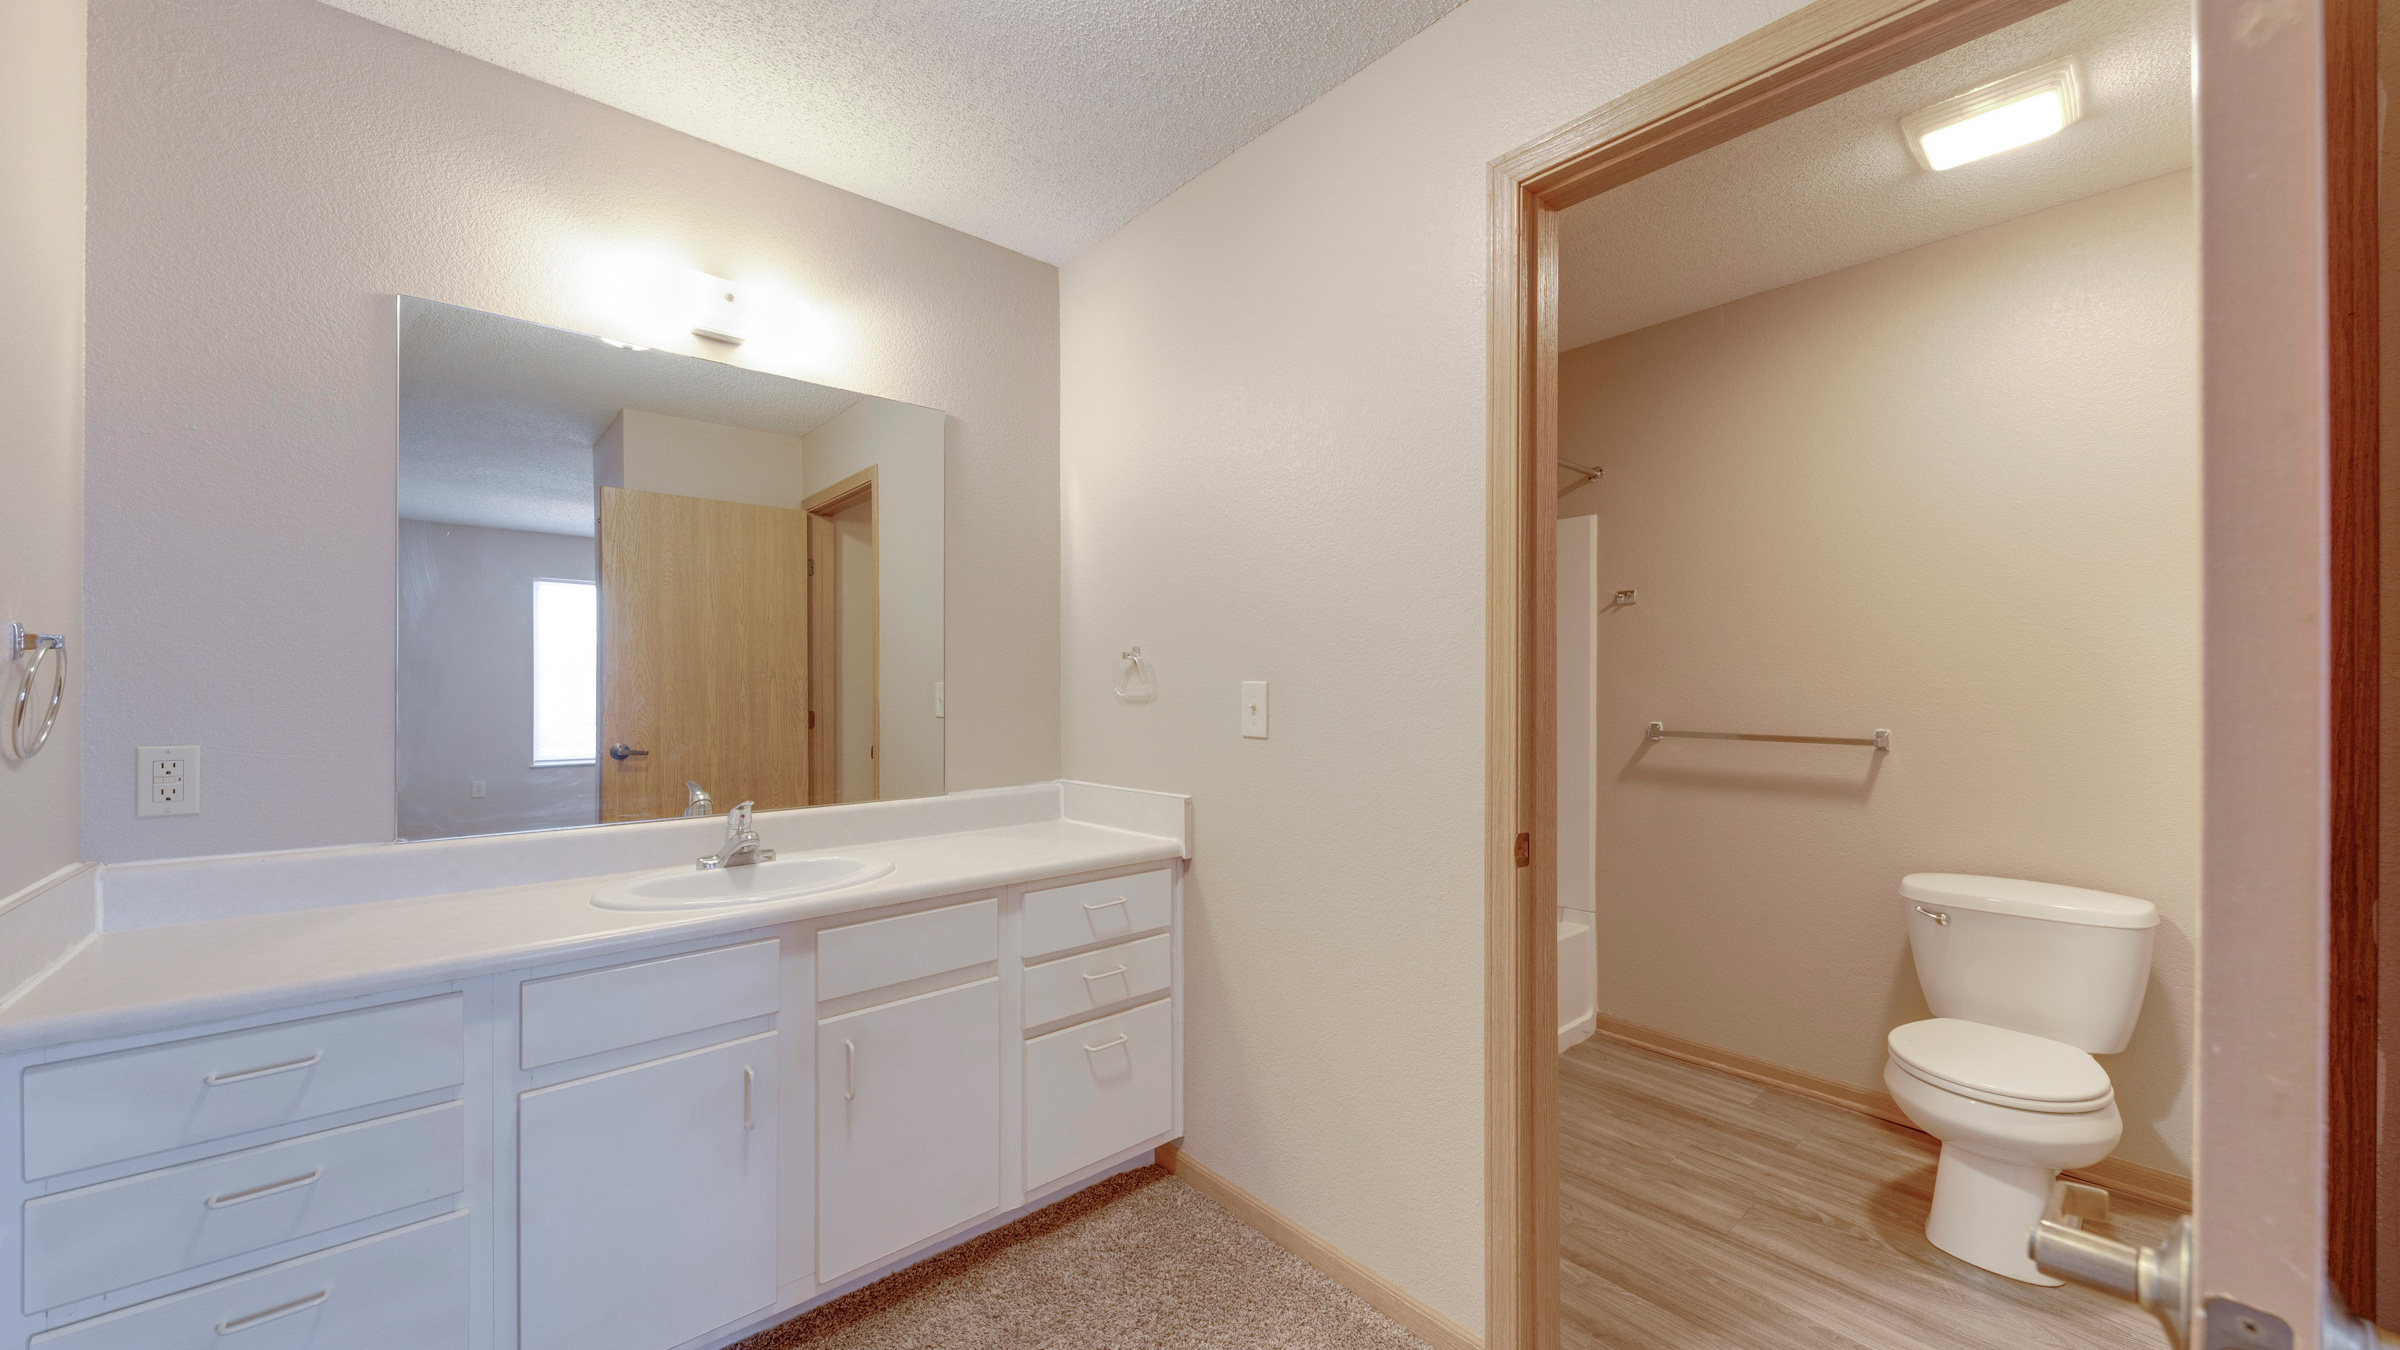 3 bedroom apartment, main bathroom - slideshow image